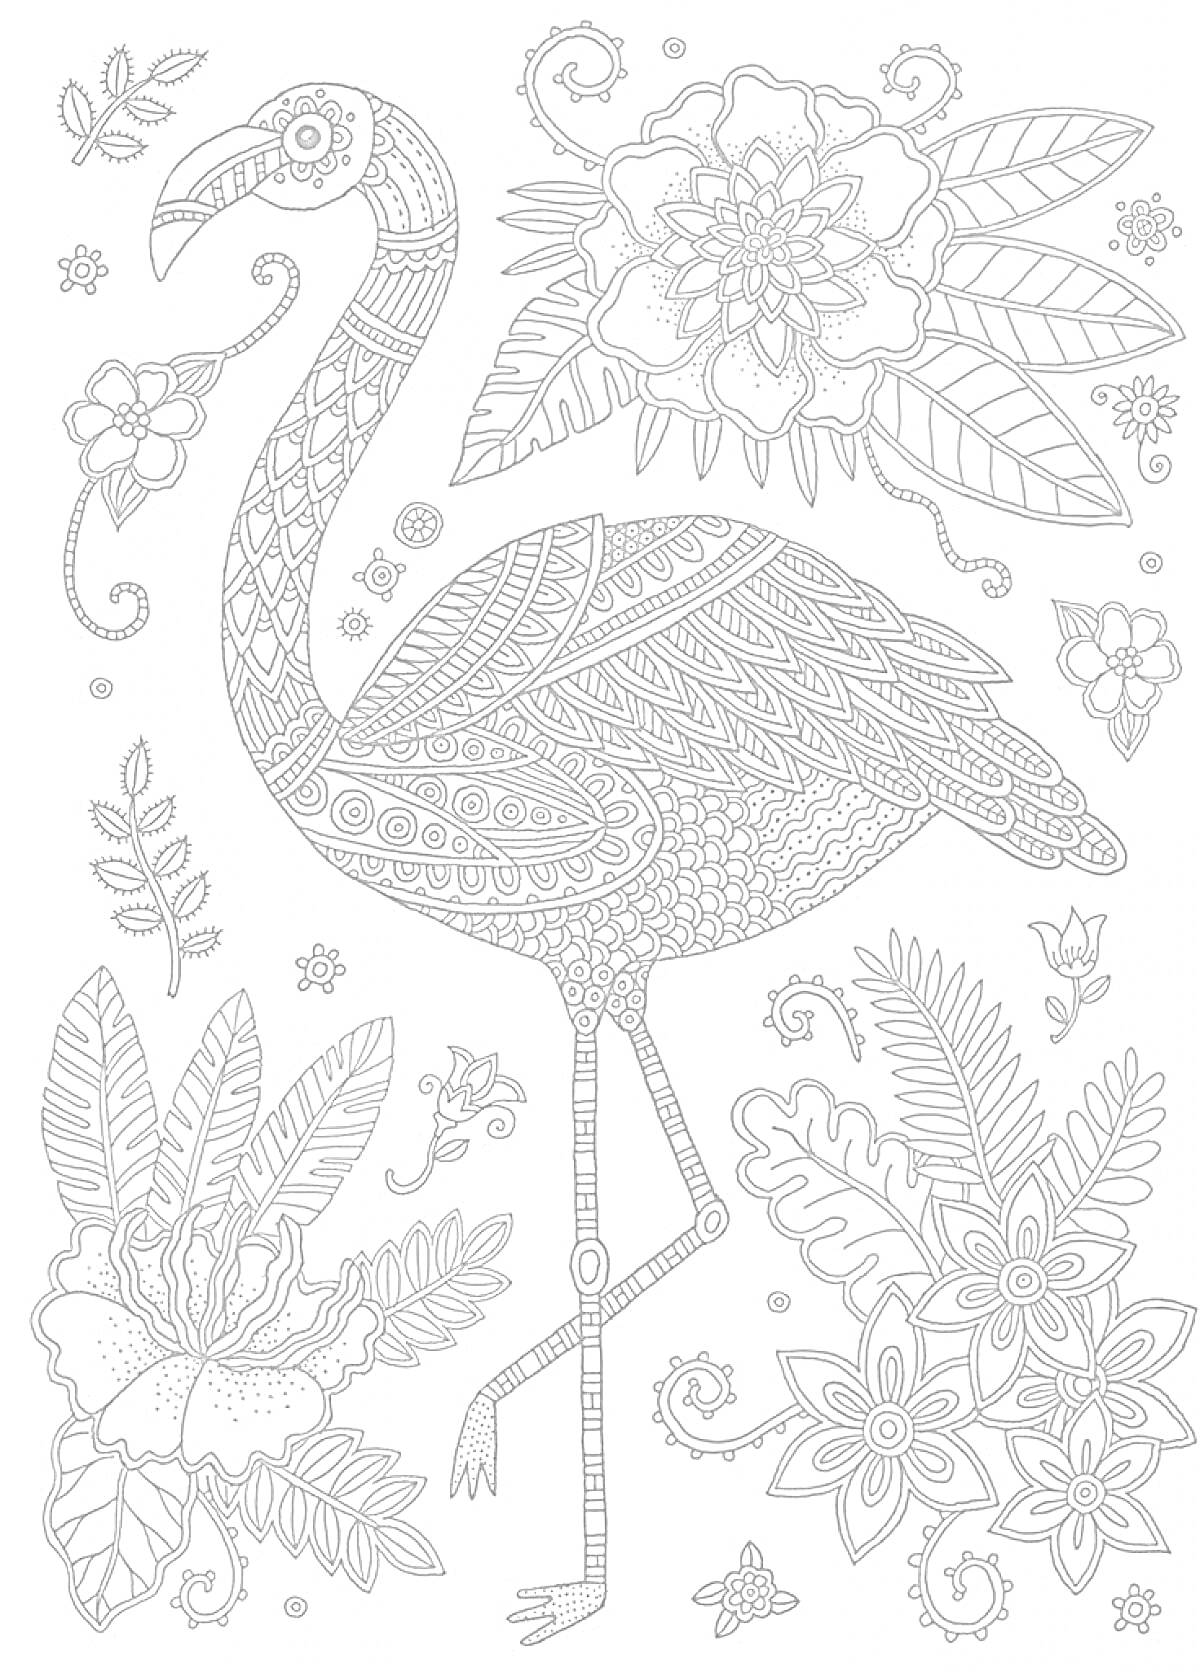 Раскраска Антистресс раскраска с фламинго, цветами, листьями и узорами